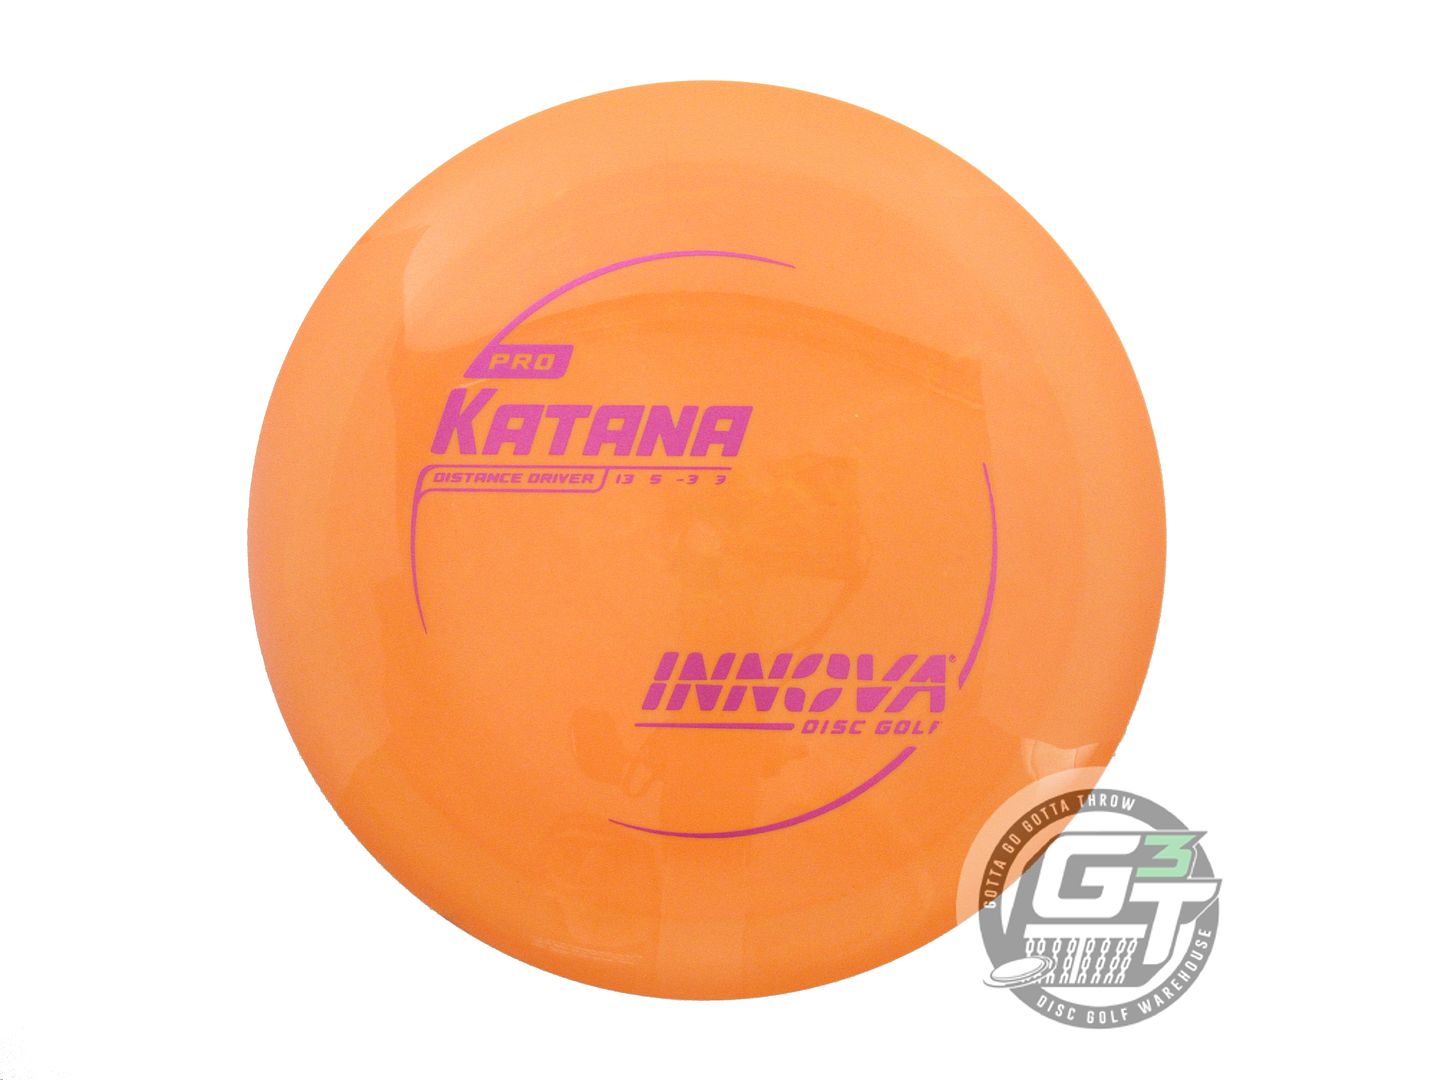 Innova Pro Katana Distance Driver Golf Disc (Individually Listed)